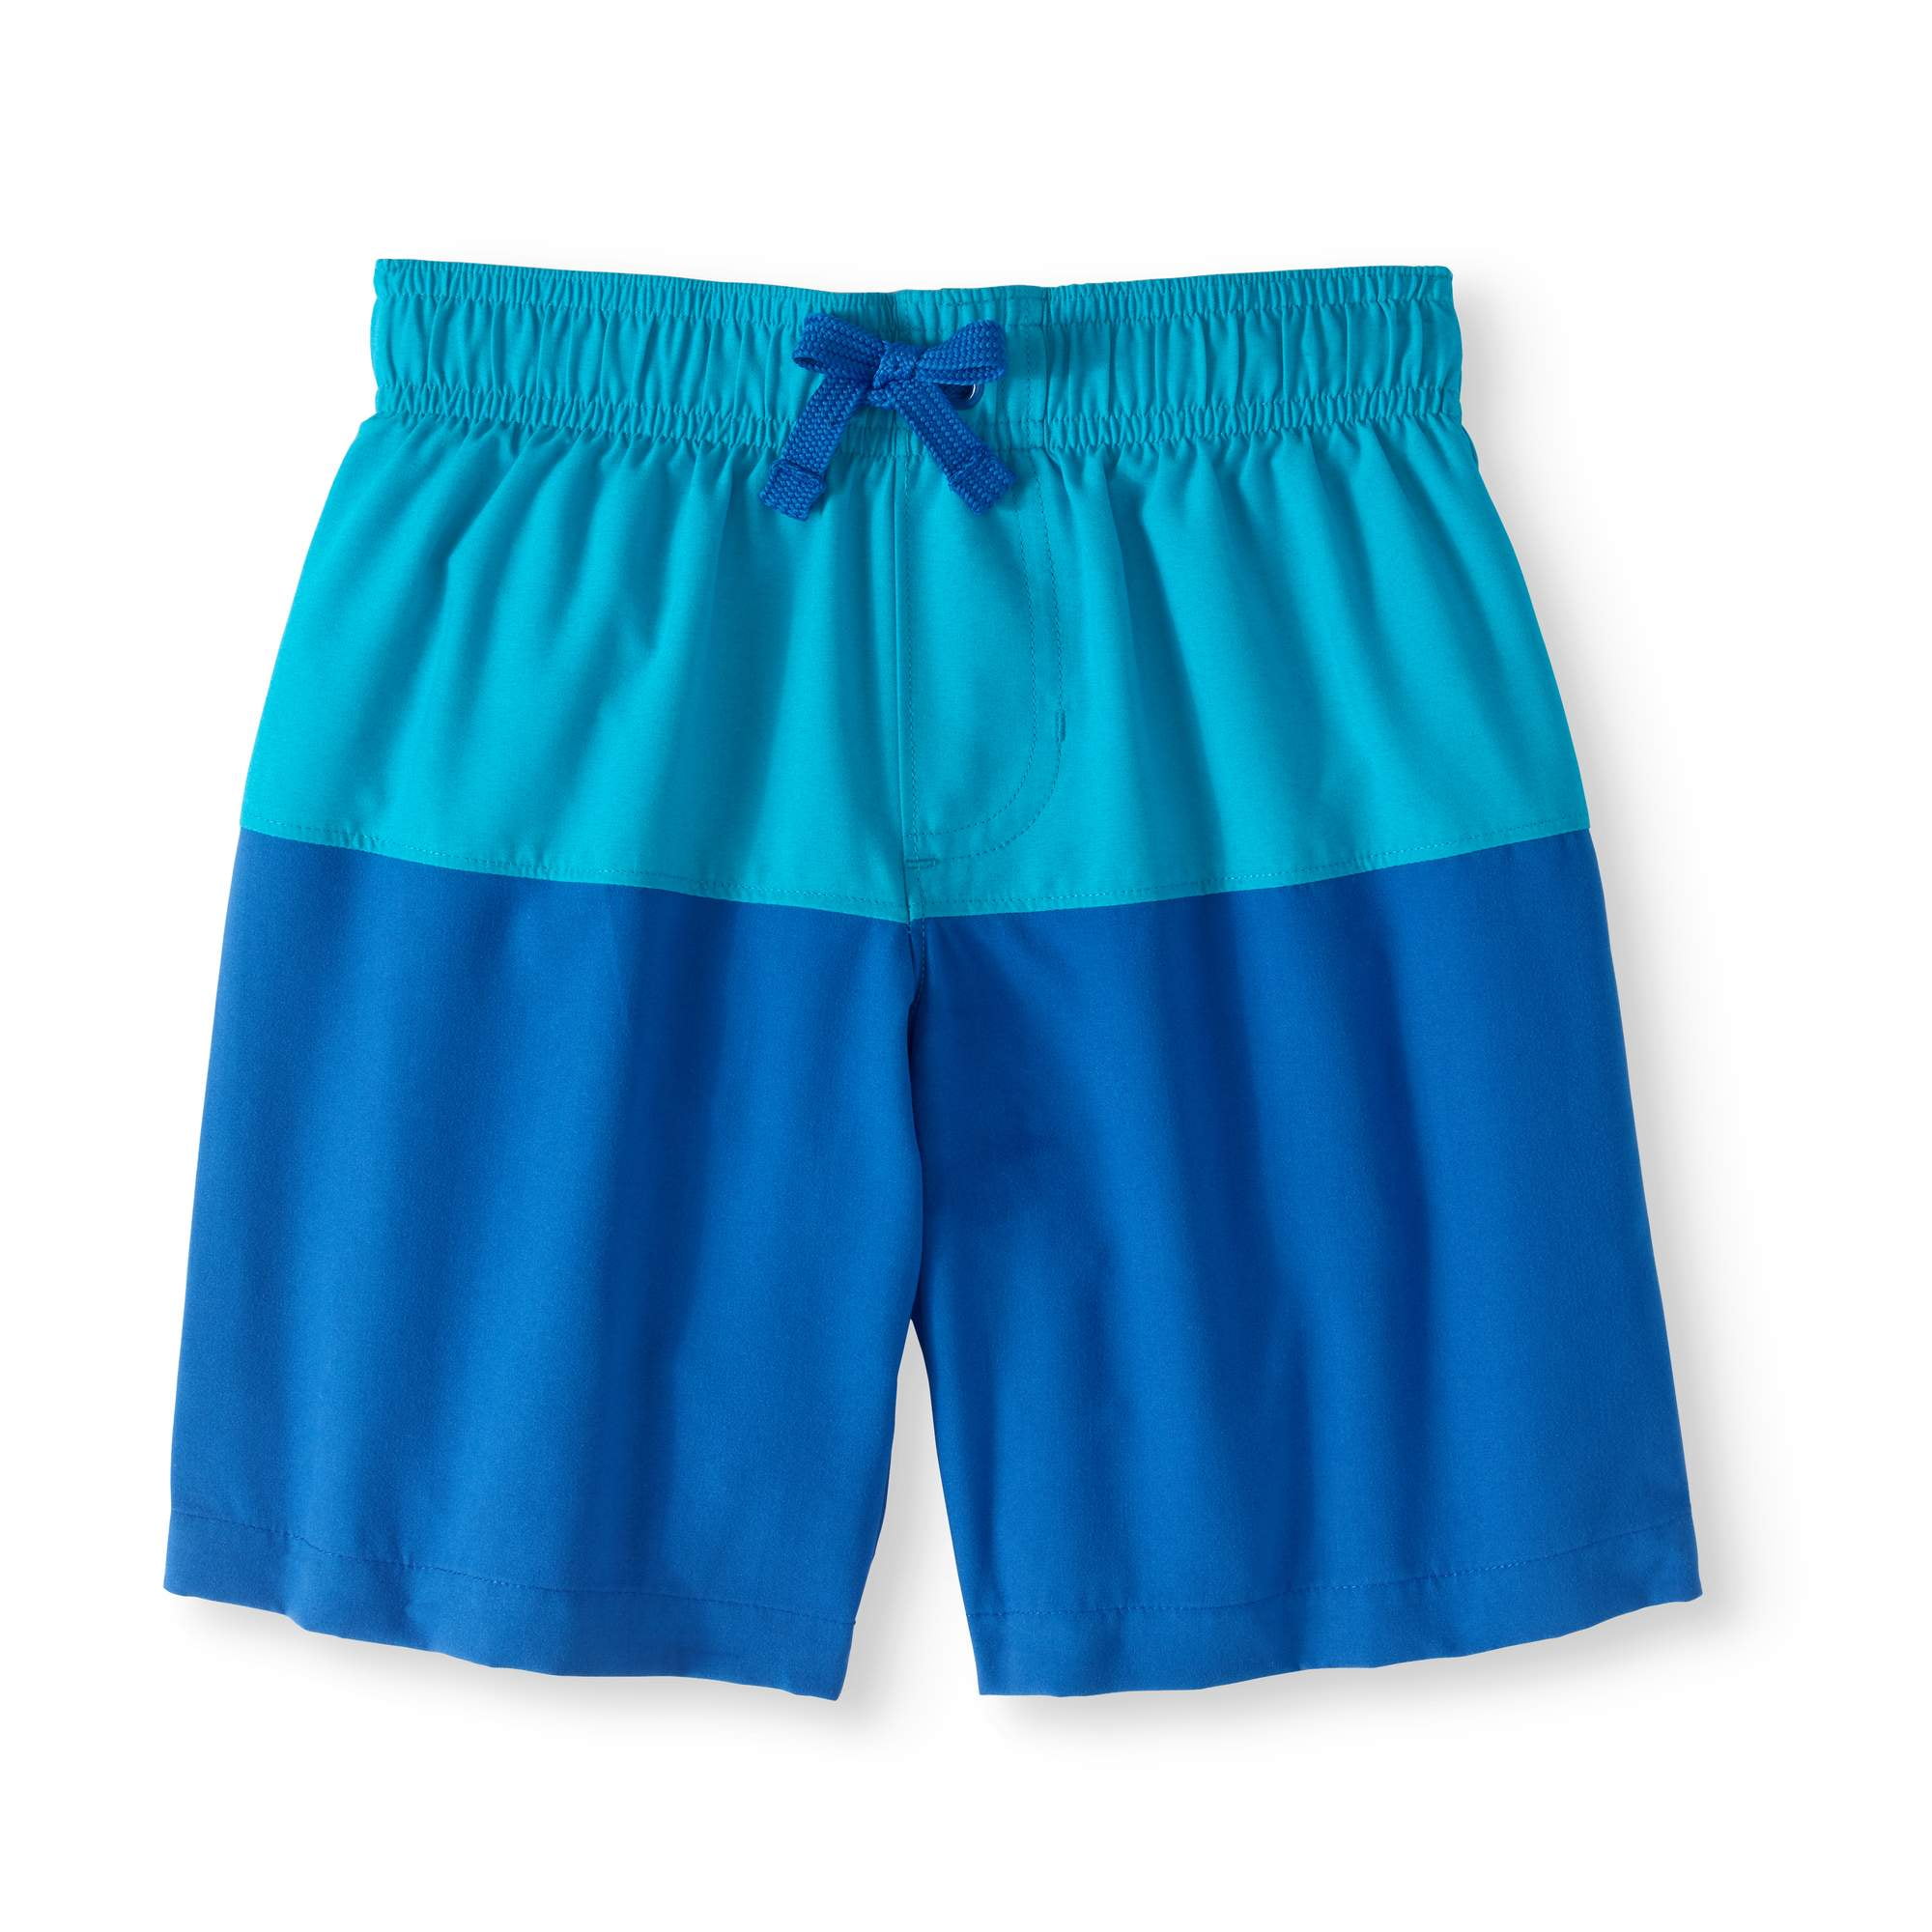 Boy's Color Block Swim Trunks - Walmart.com